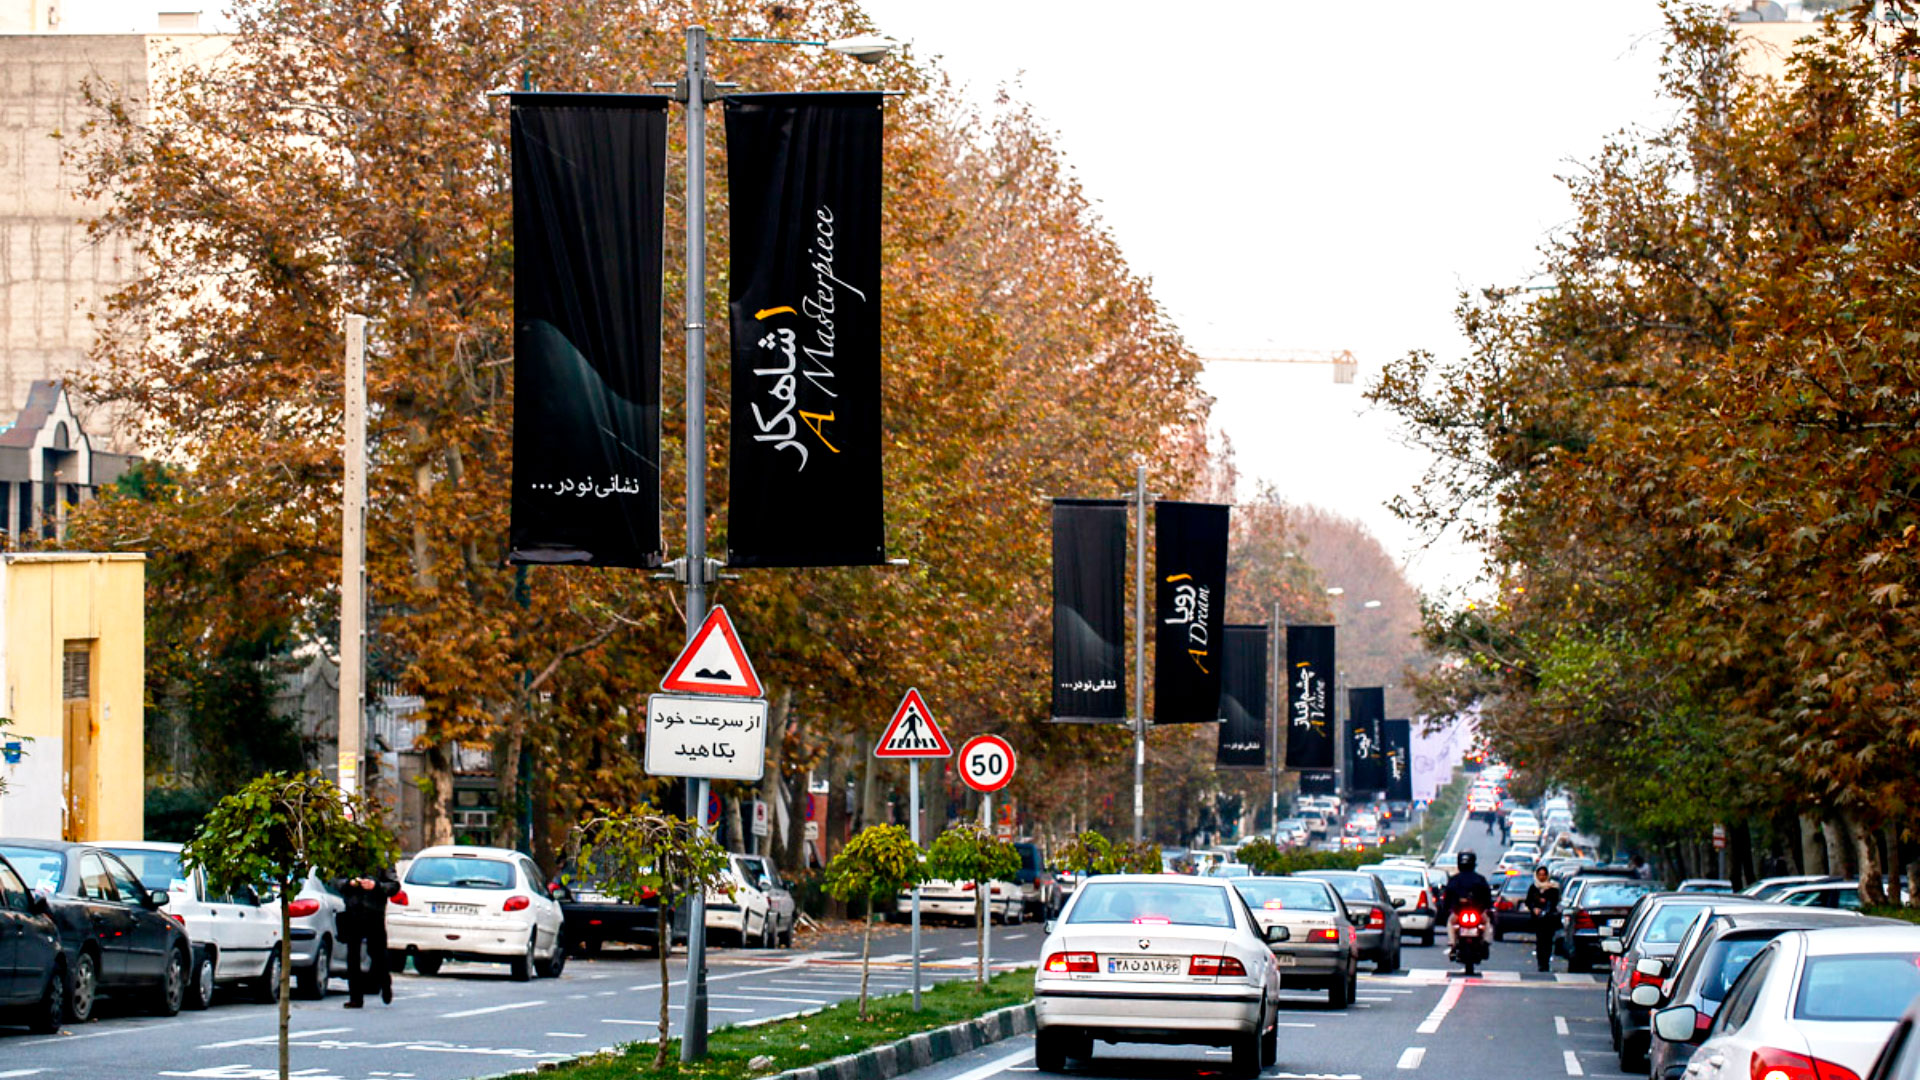 Designing Teasing Advertising Billboards in Iran